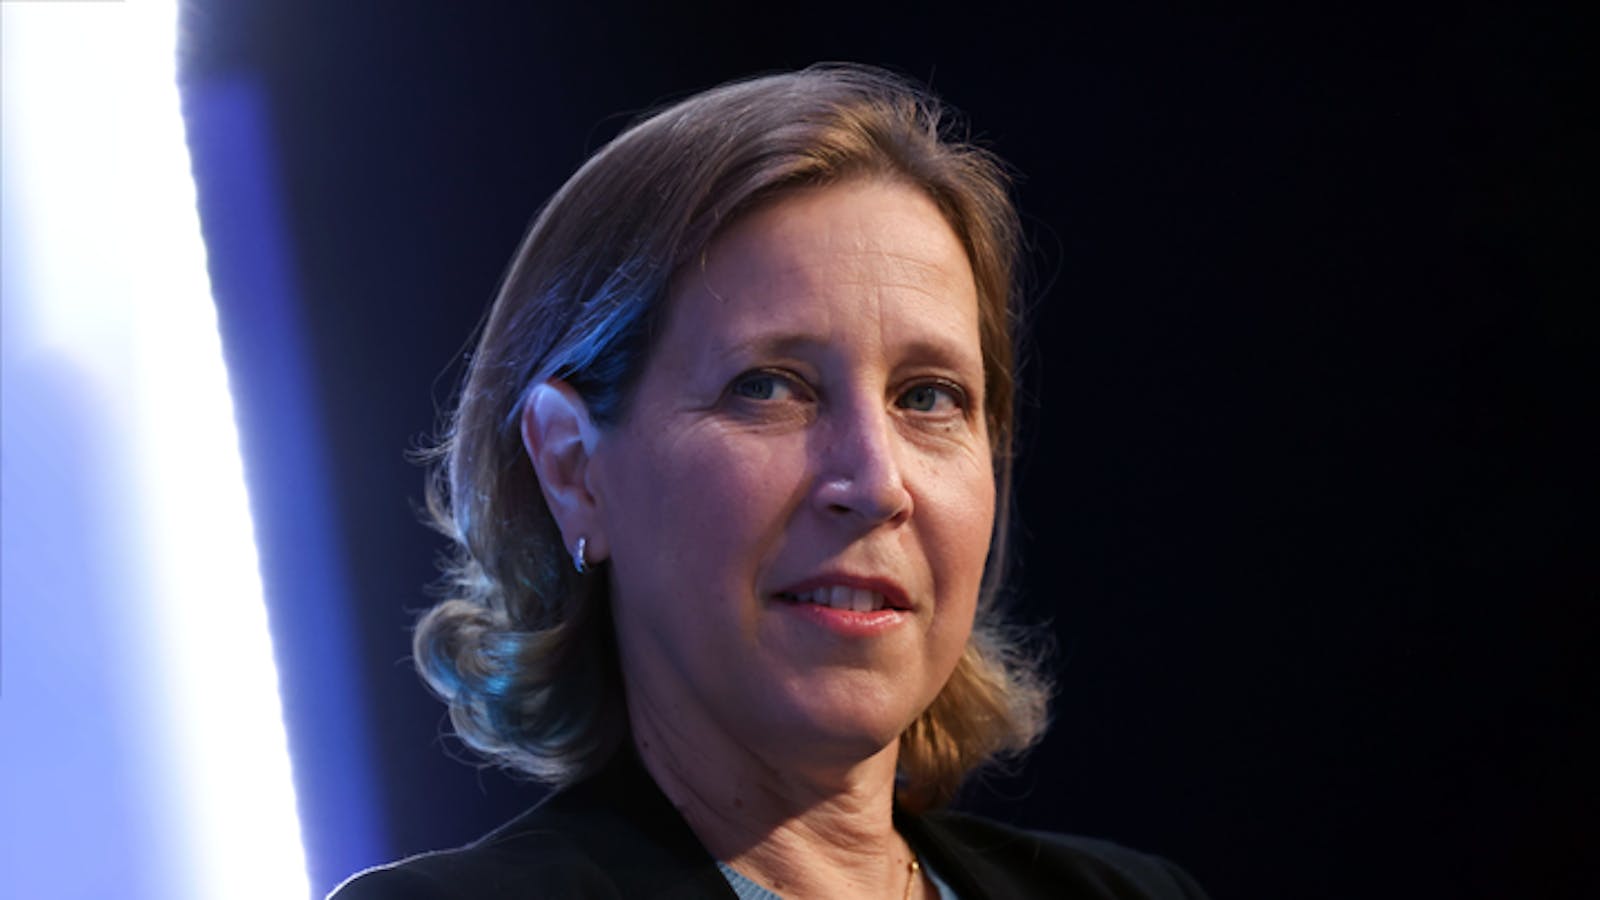 Susan Wojcicki announced she would step down as YouTube CEO. Photo via Bloomberg